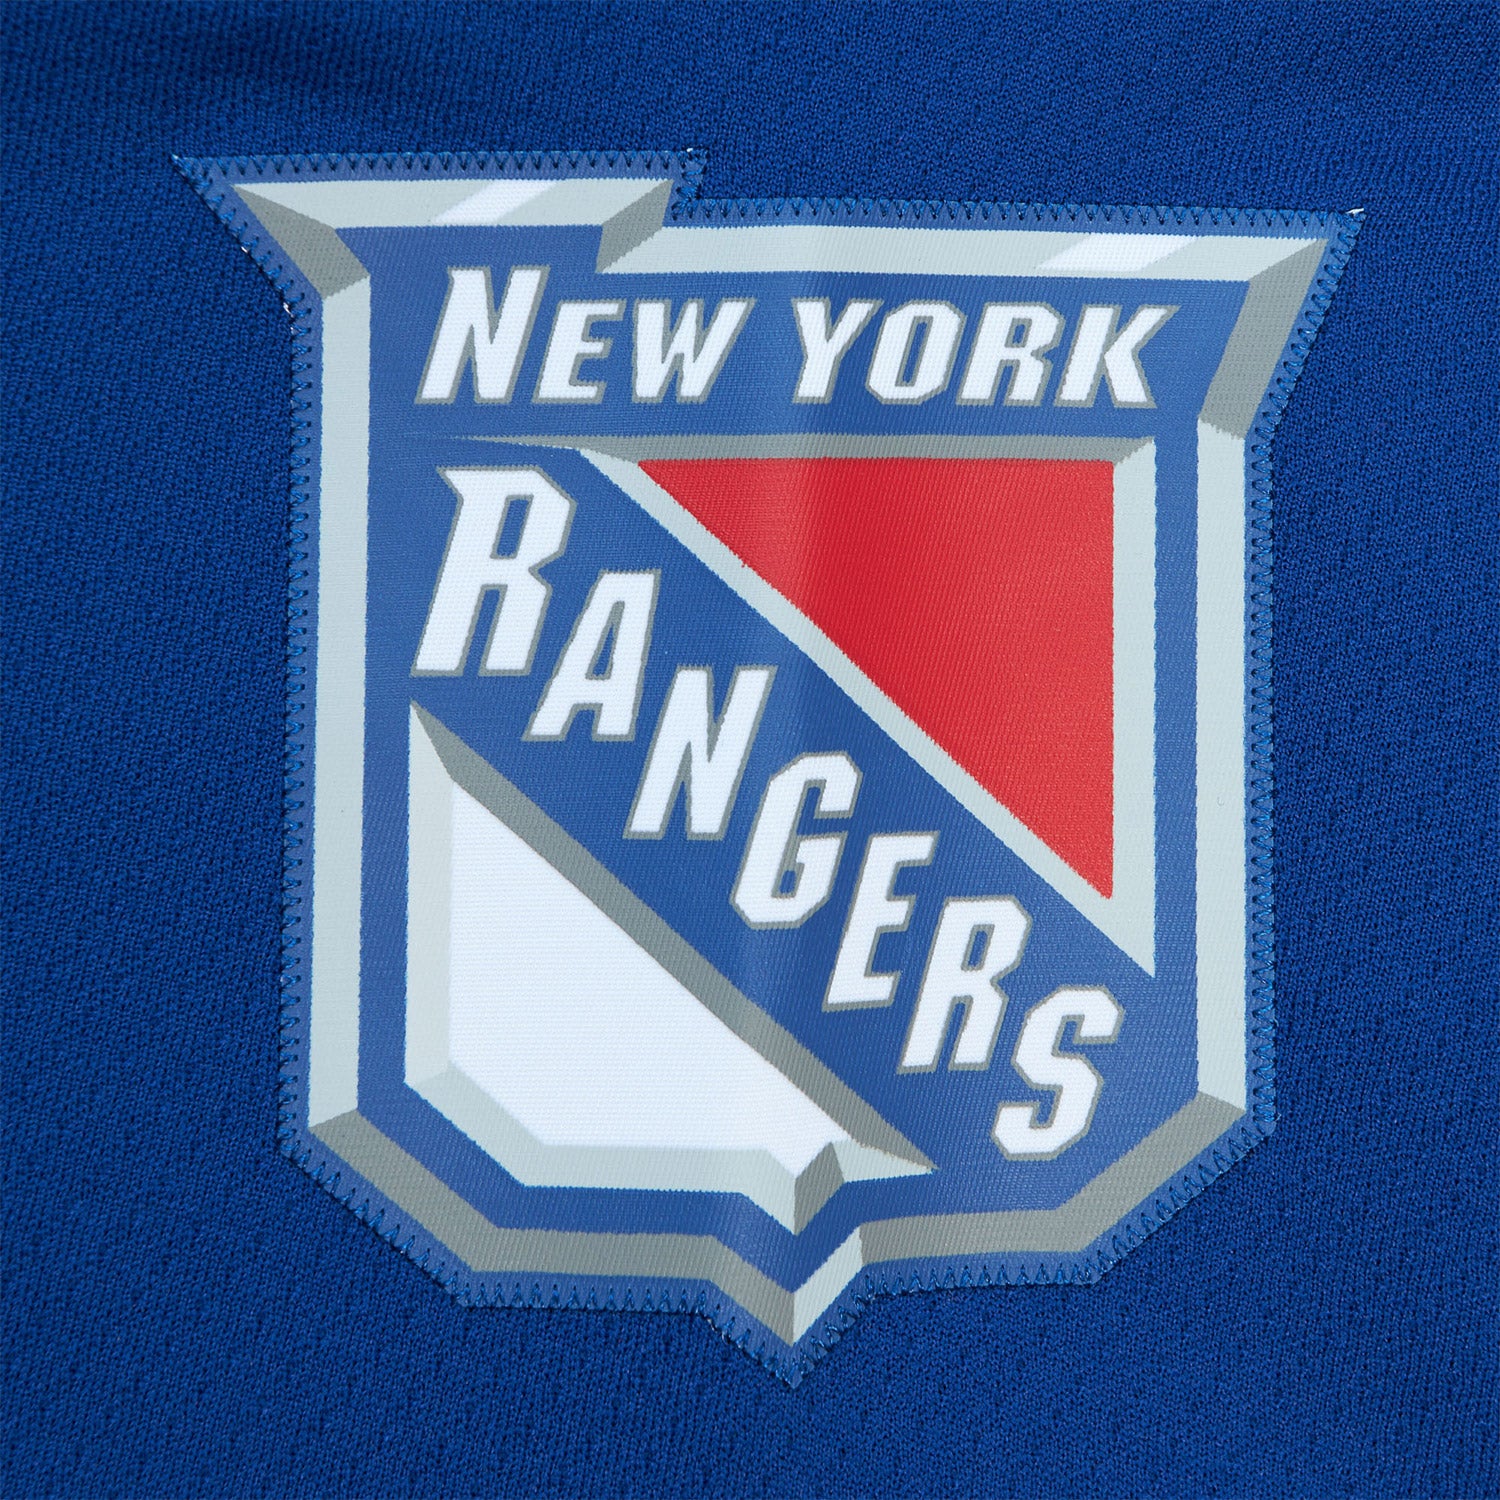 New York Rangers Alternate Jersey Options